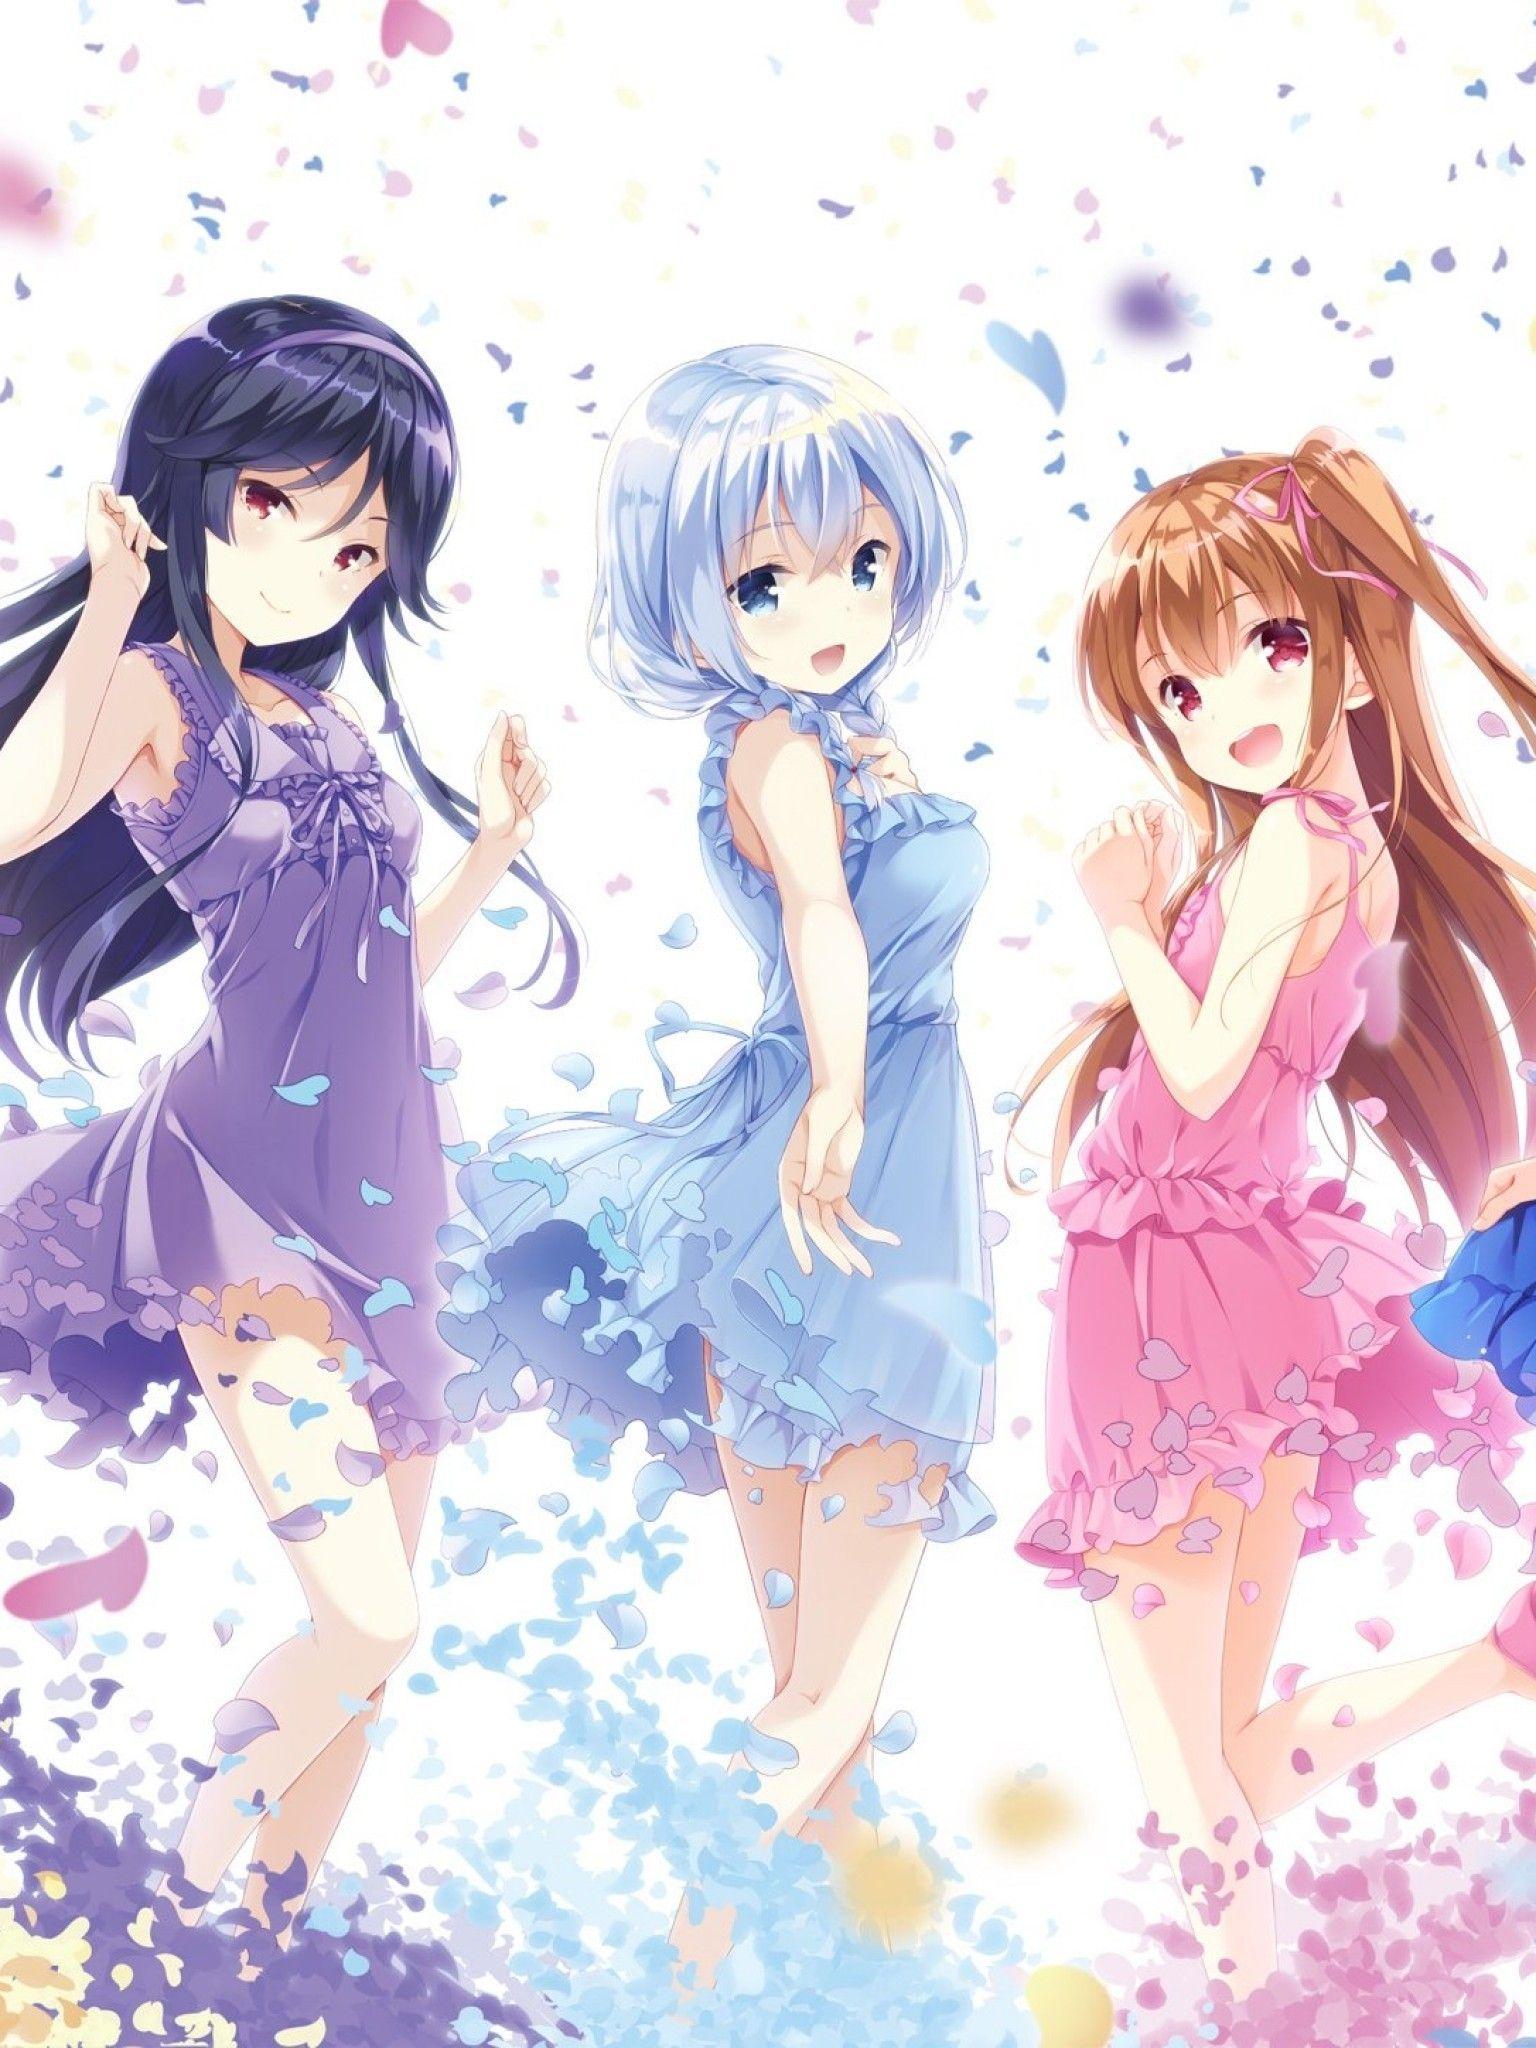 Download 1536x2048 Anime Girls, Moe, Light Dress, White Hair, Pink Hair, Smiling, Petals, Friends Wallpaper for Apple iPad Mini, Apple IPad 4